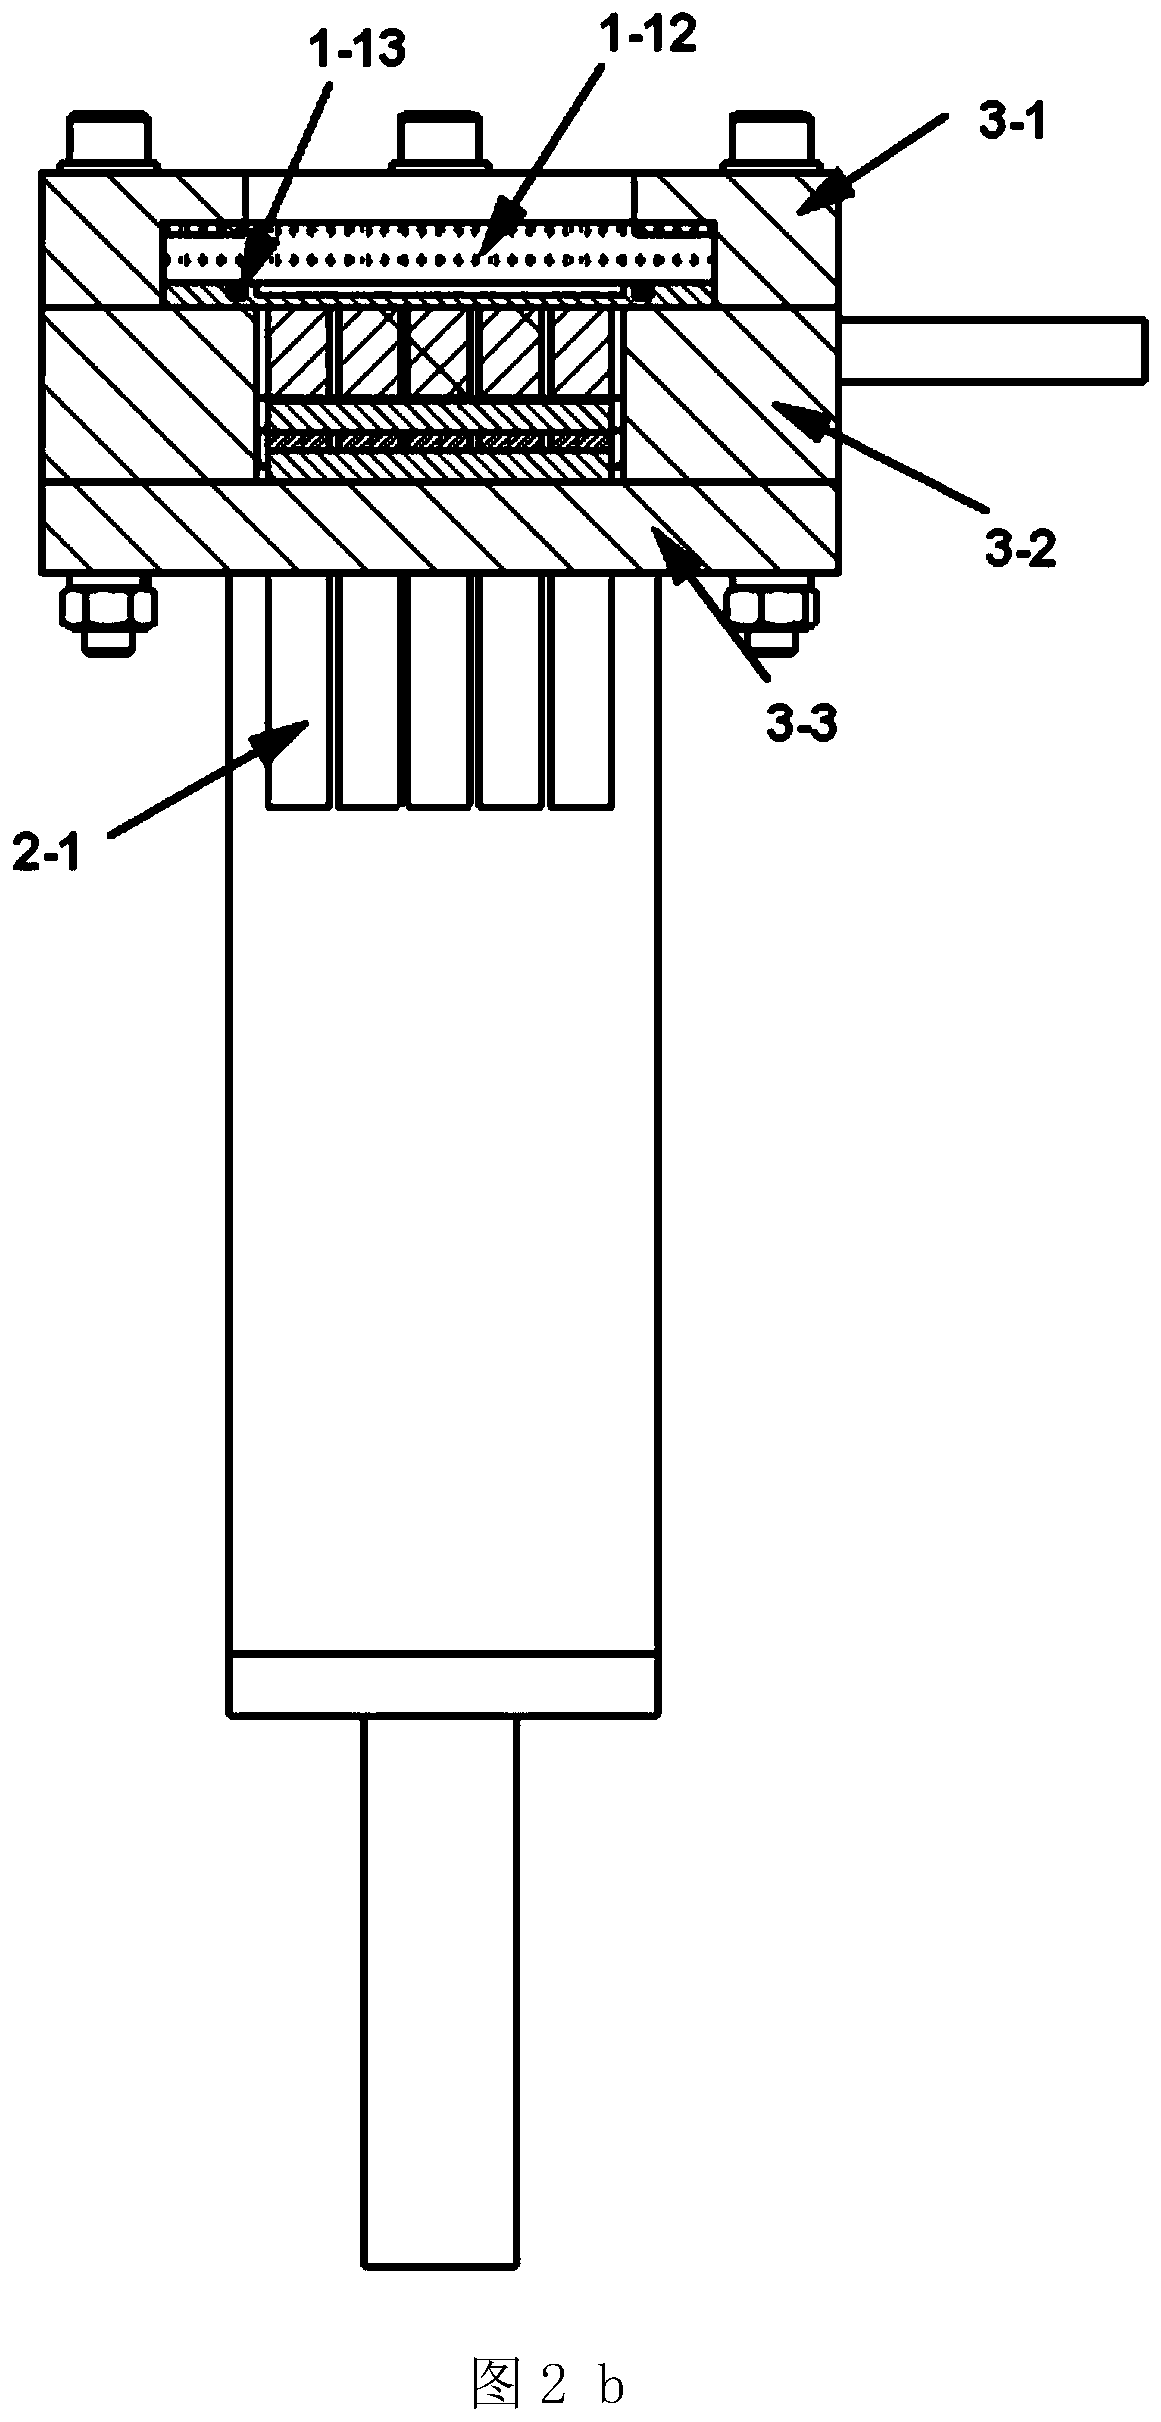 Horizontal non-uniform indirect heating rectangular channel flow visualization test apparatus